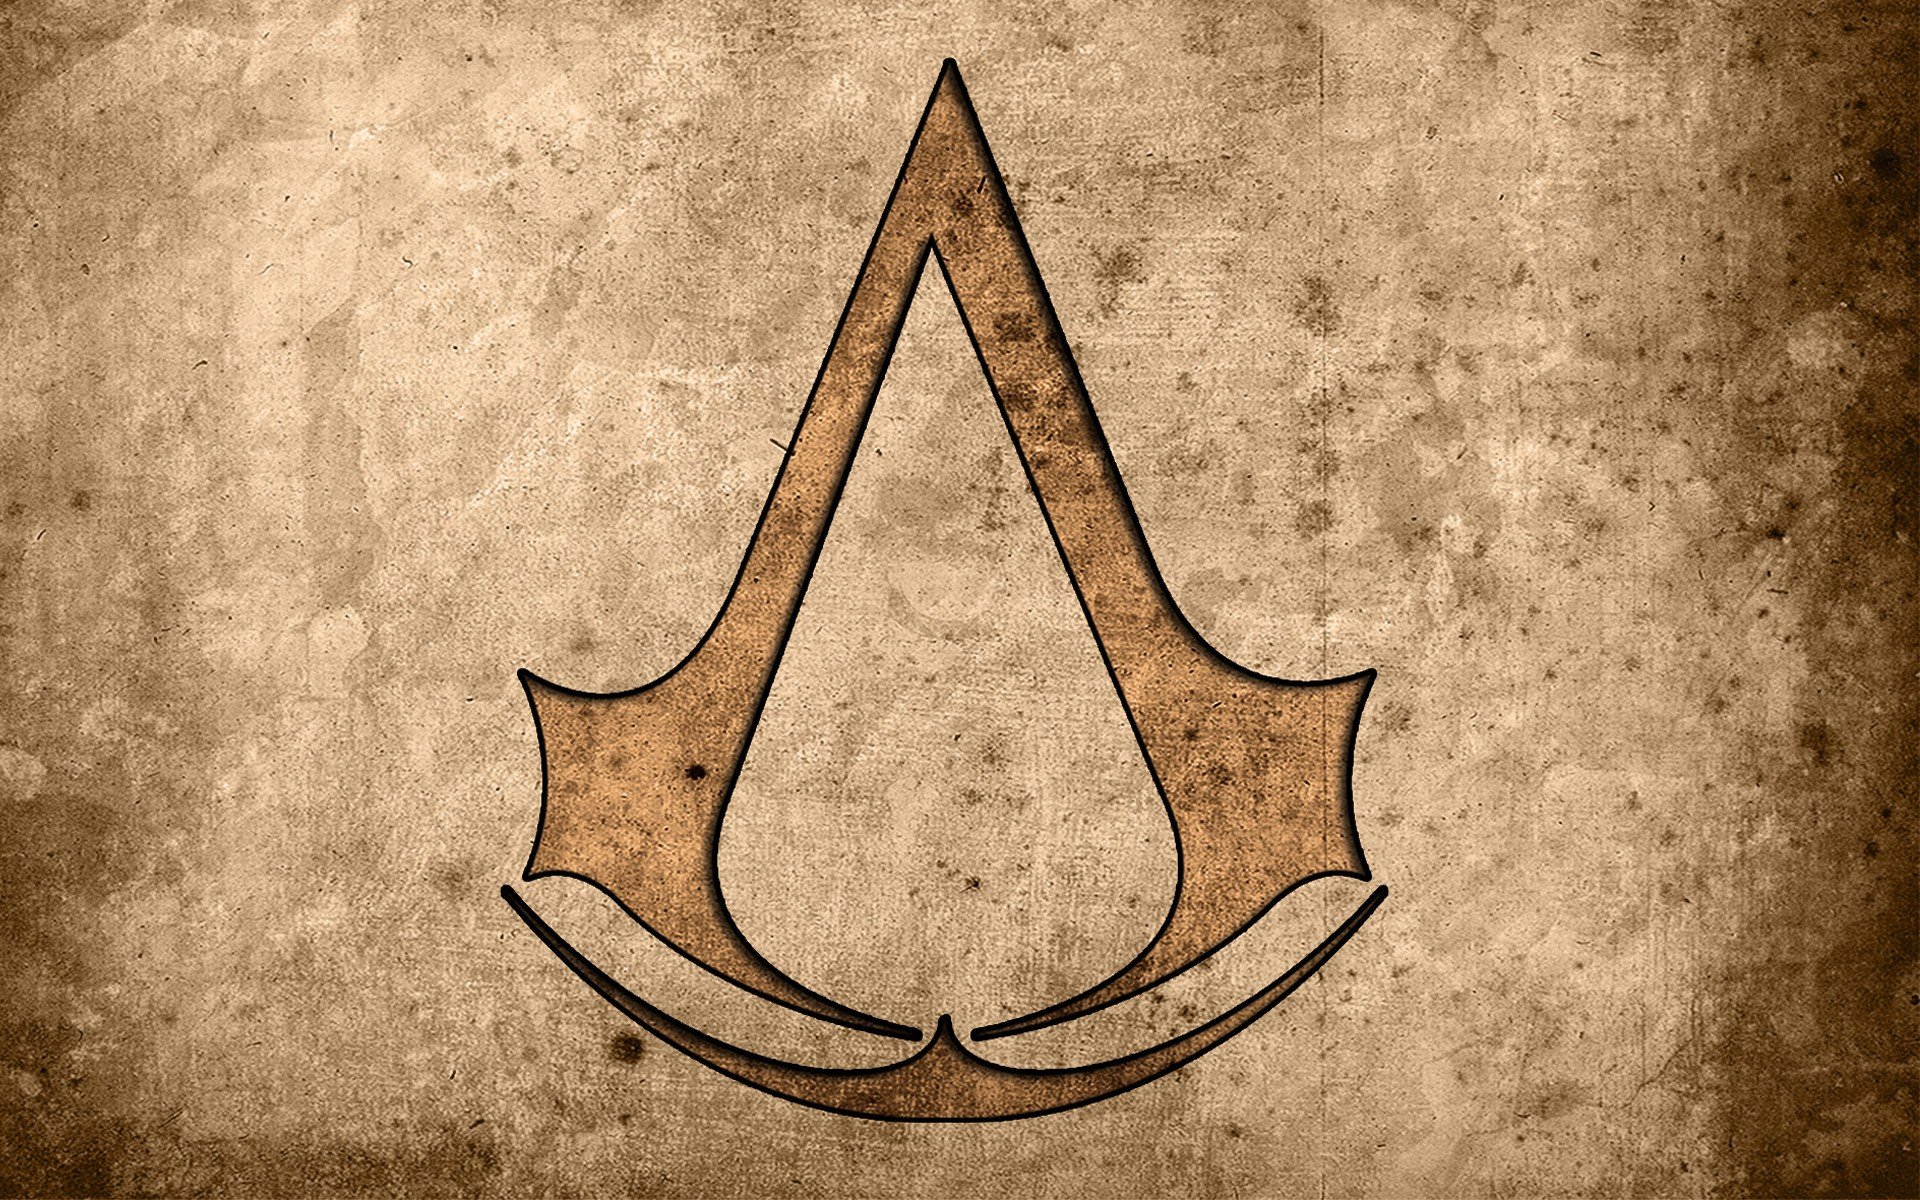 video, Games, Assassins, Creed Wallpaper